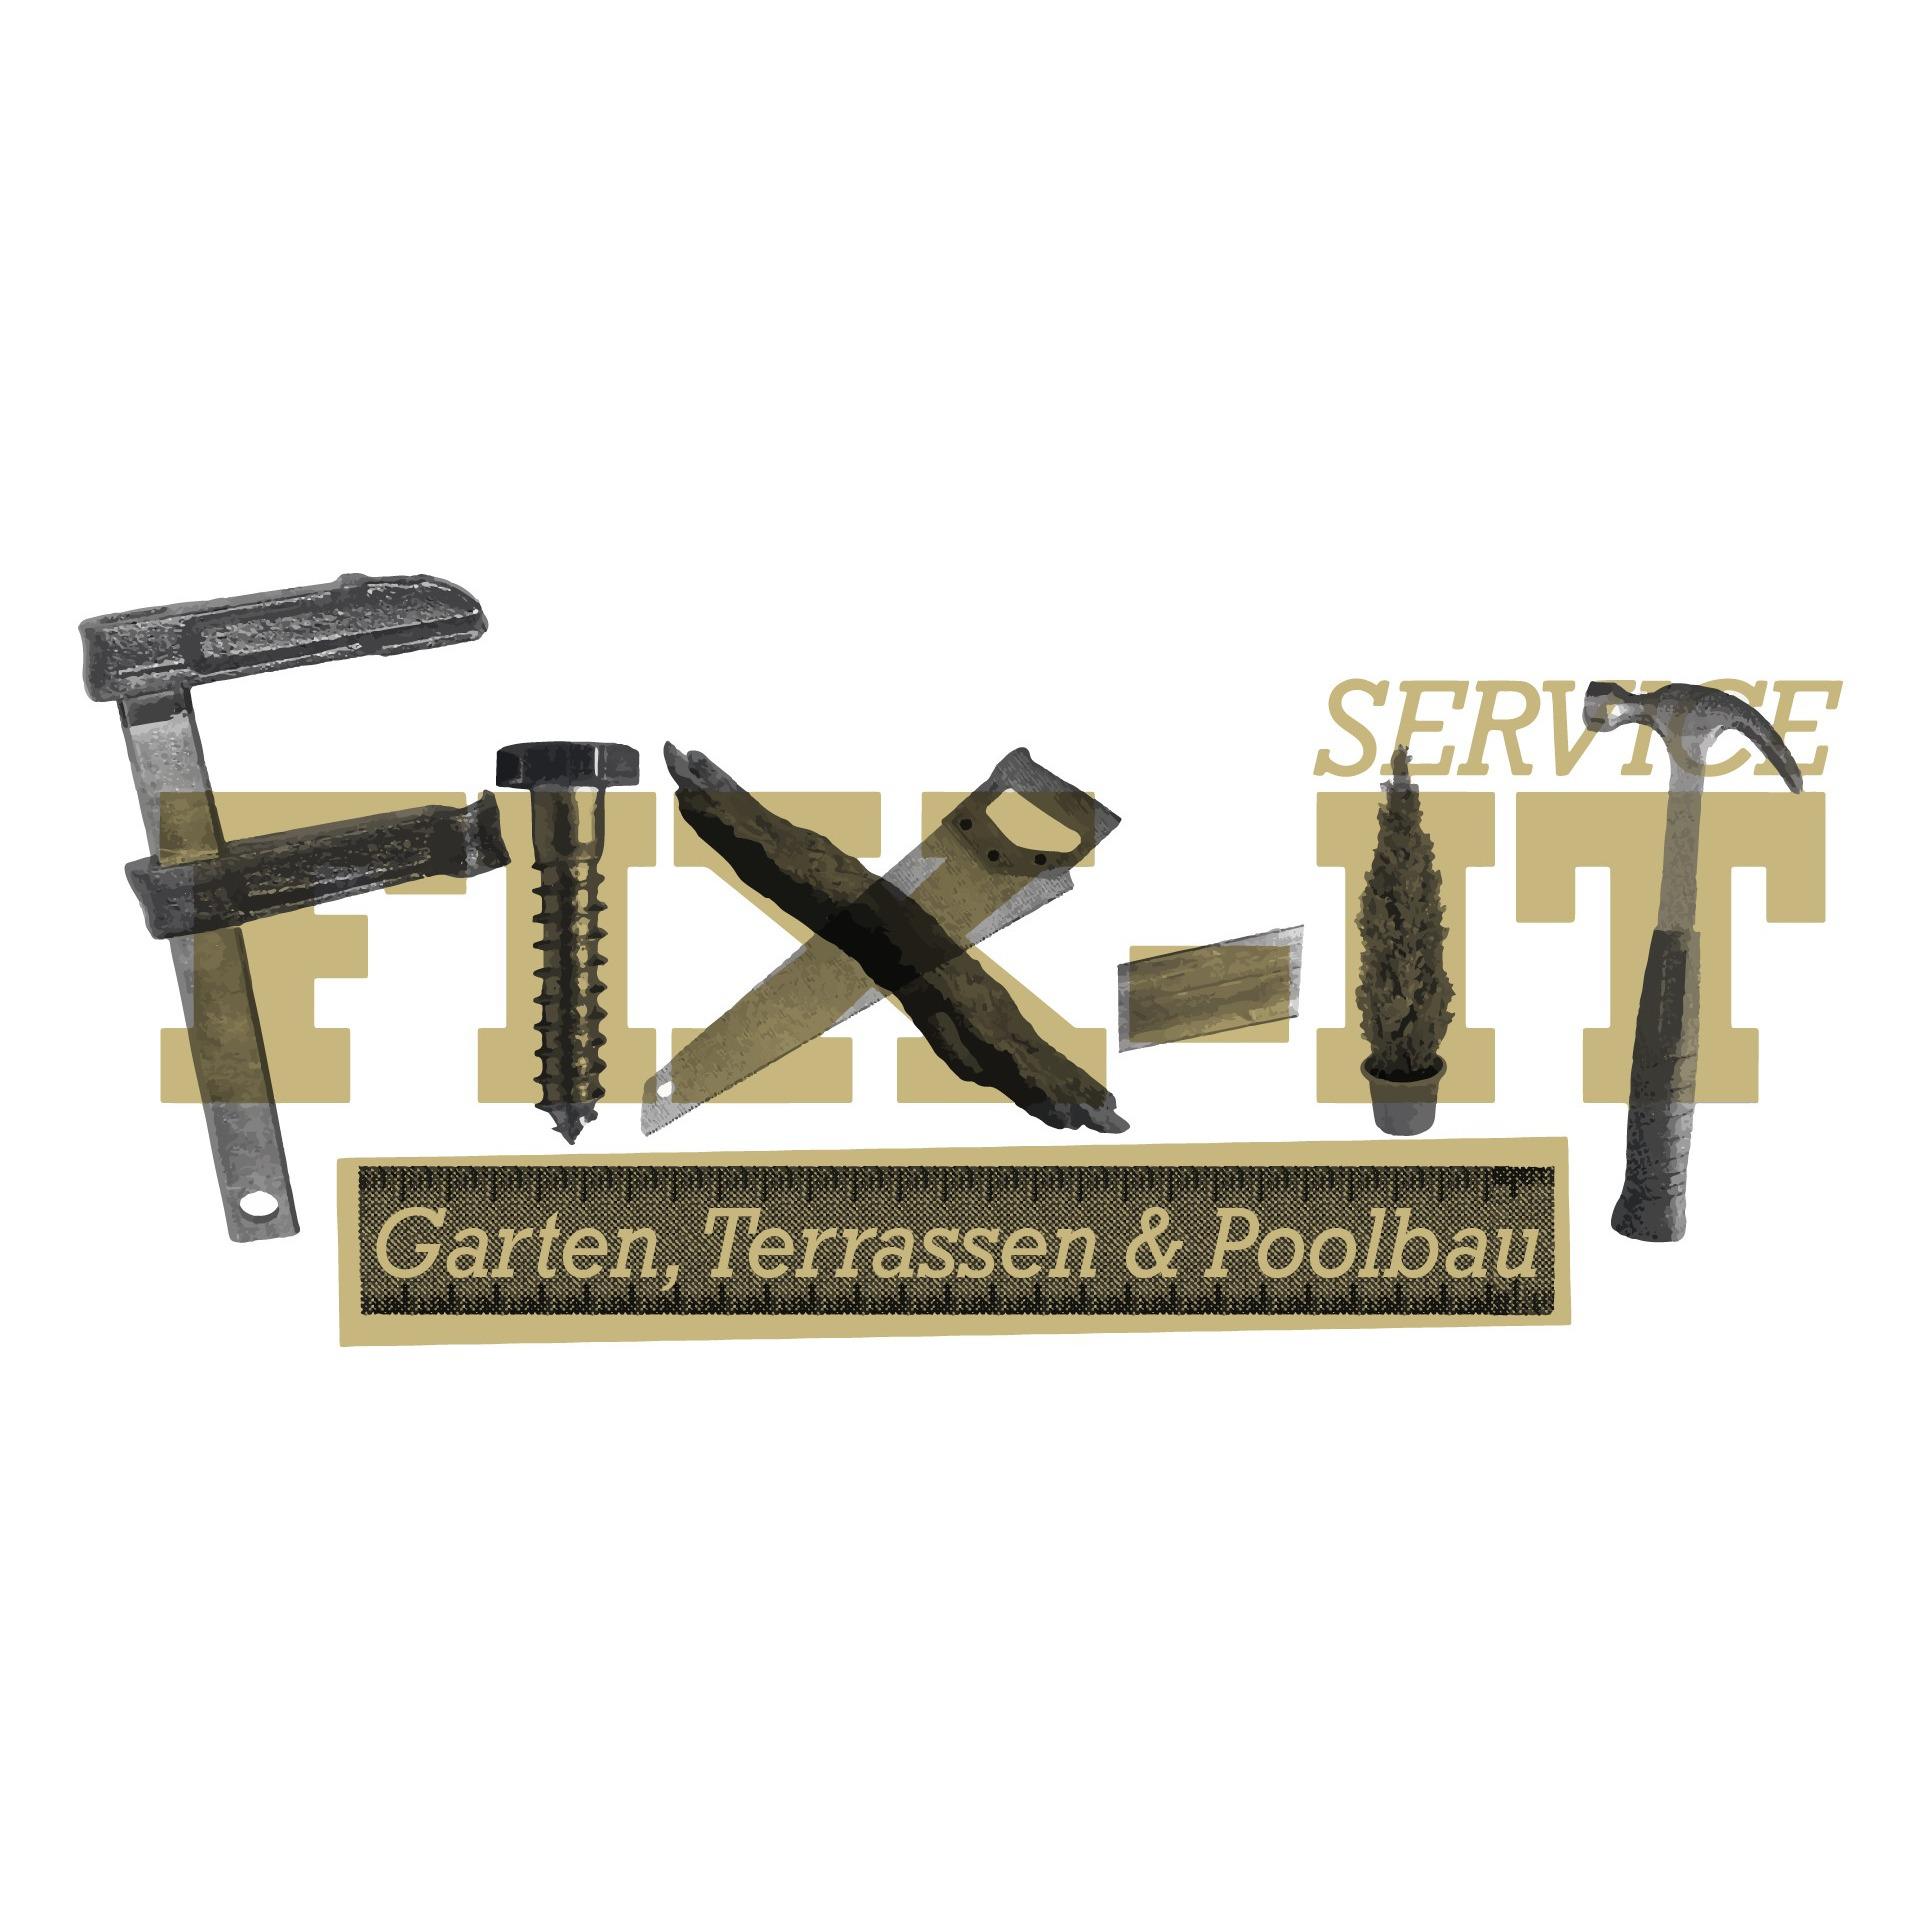 FIX IT SERVICE Garten- Landschafts, Terrassen & Poolbau  